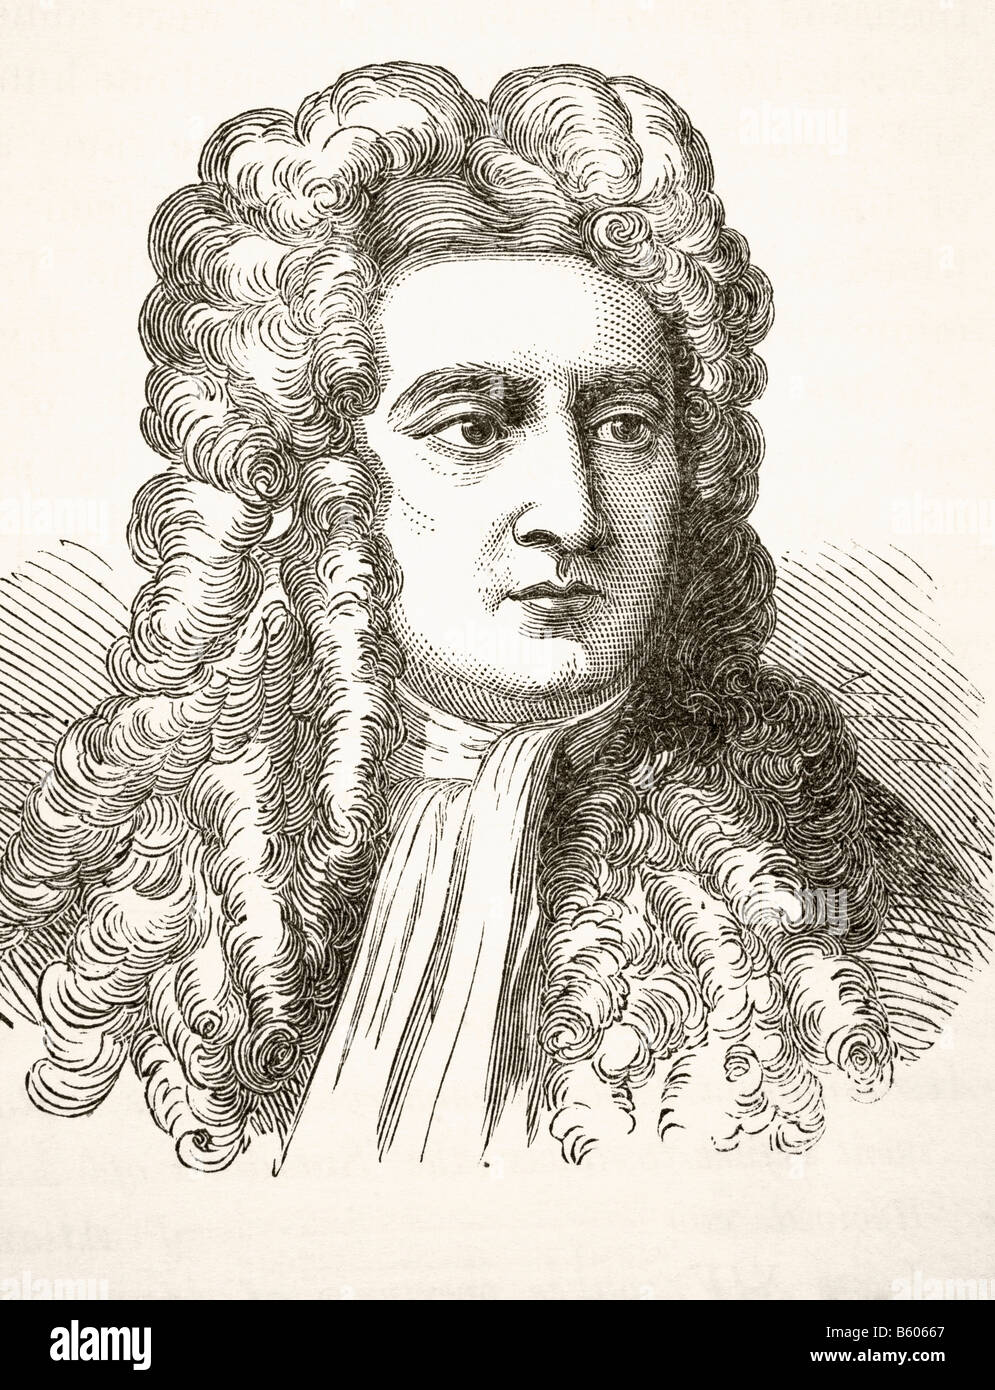 Sir Isaac Newton, 1642 - 1727. English physicist and mathematical